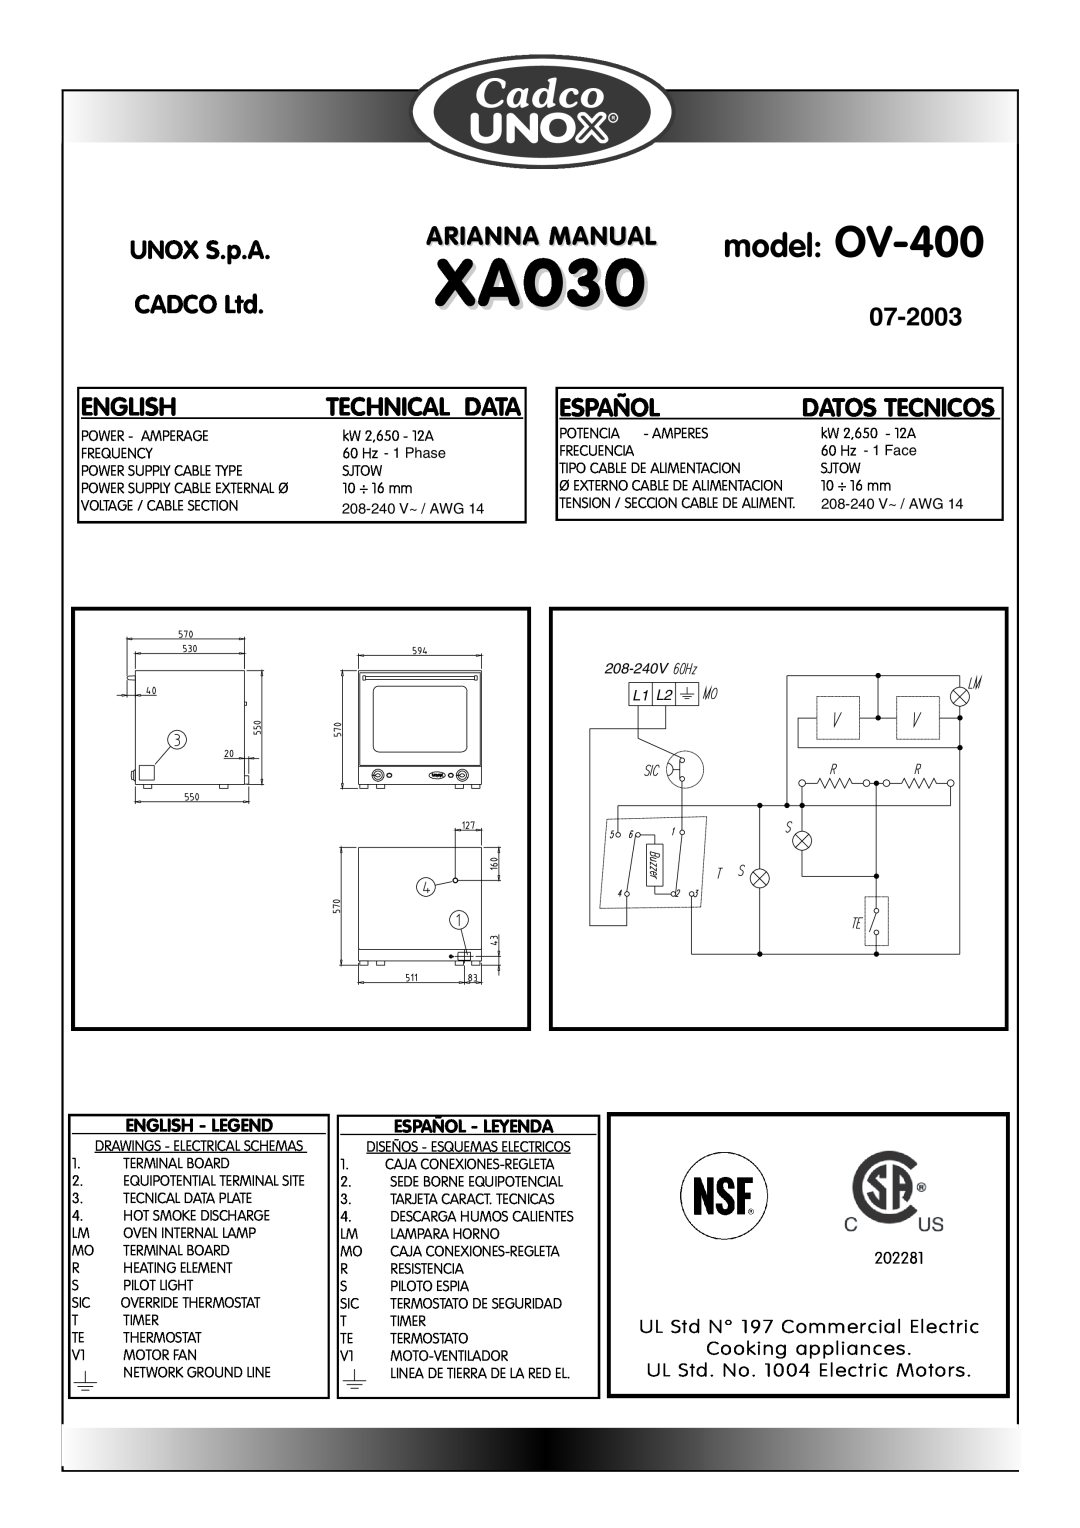 Cadco OV-600 XA030, model OV-400, UNOX S.p.A, Arianna Manual, 07-2003, English, Español, Technical Data, Datos Tecnicos 